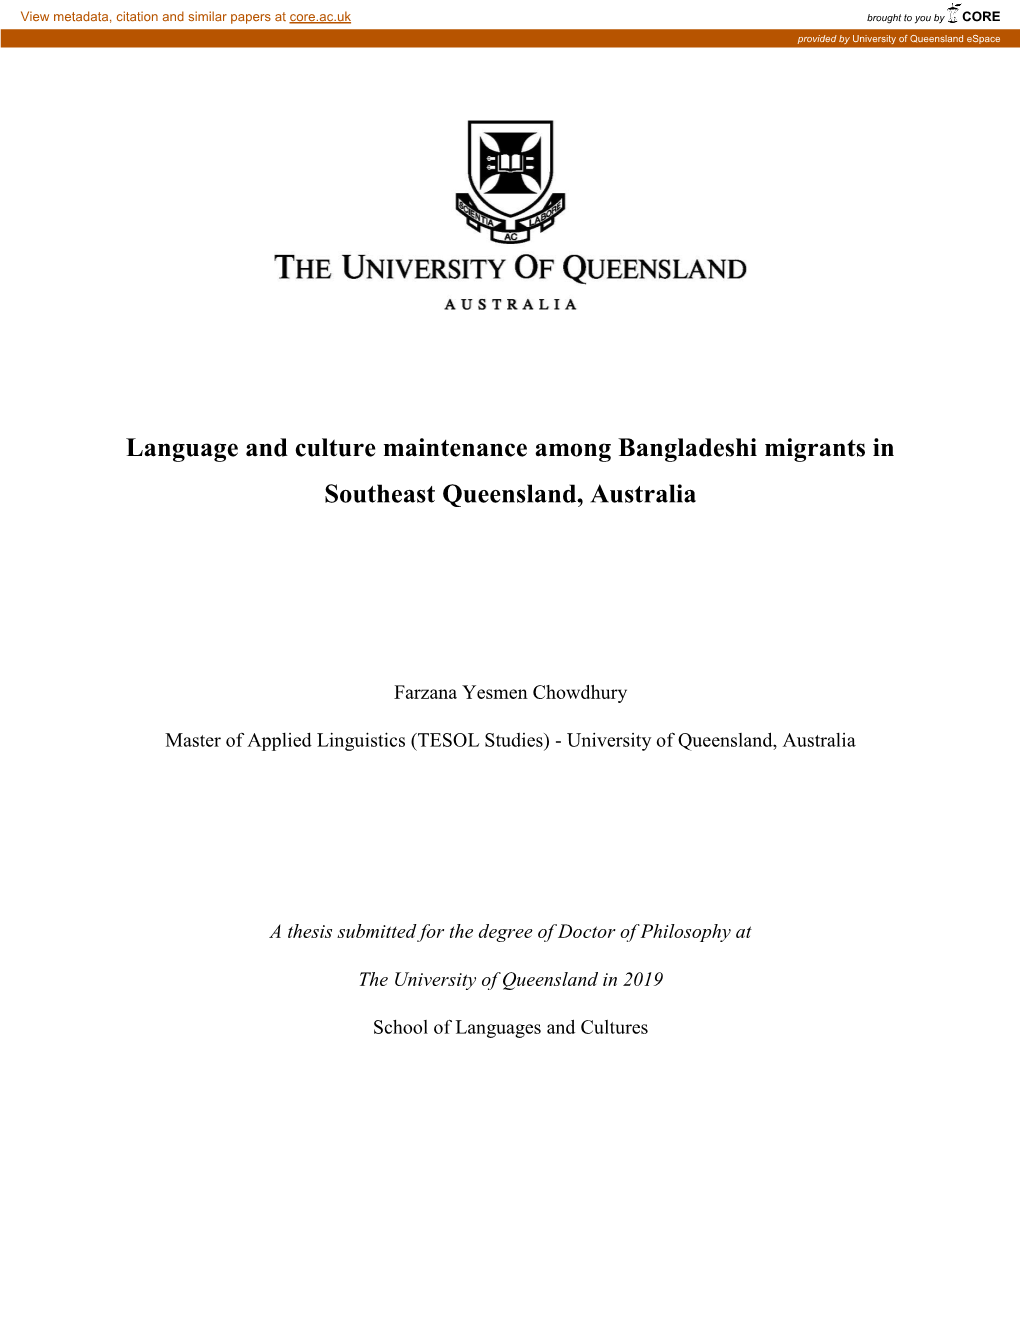 Language and Culture Maintenance Among Bangladeshi Migrants in Southeast Queensland, Australia